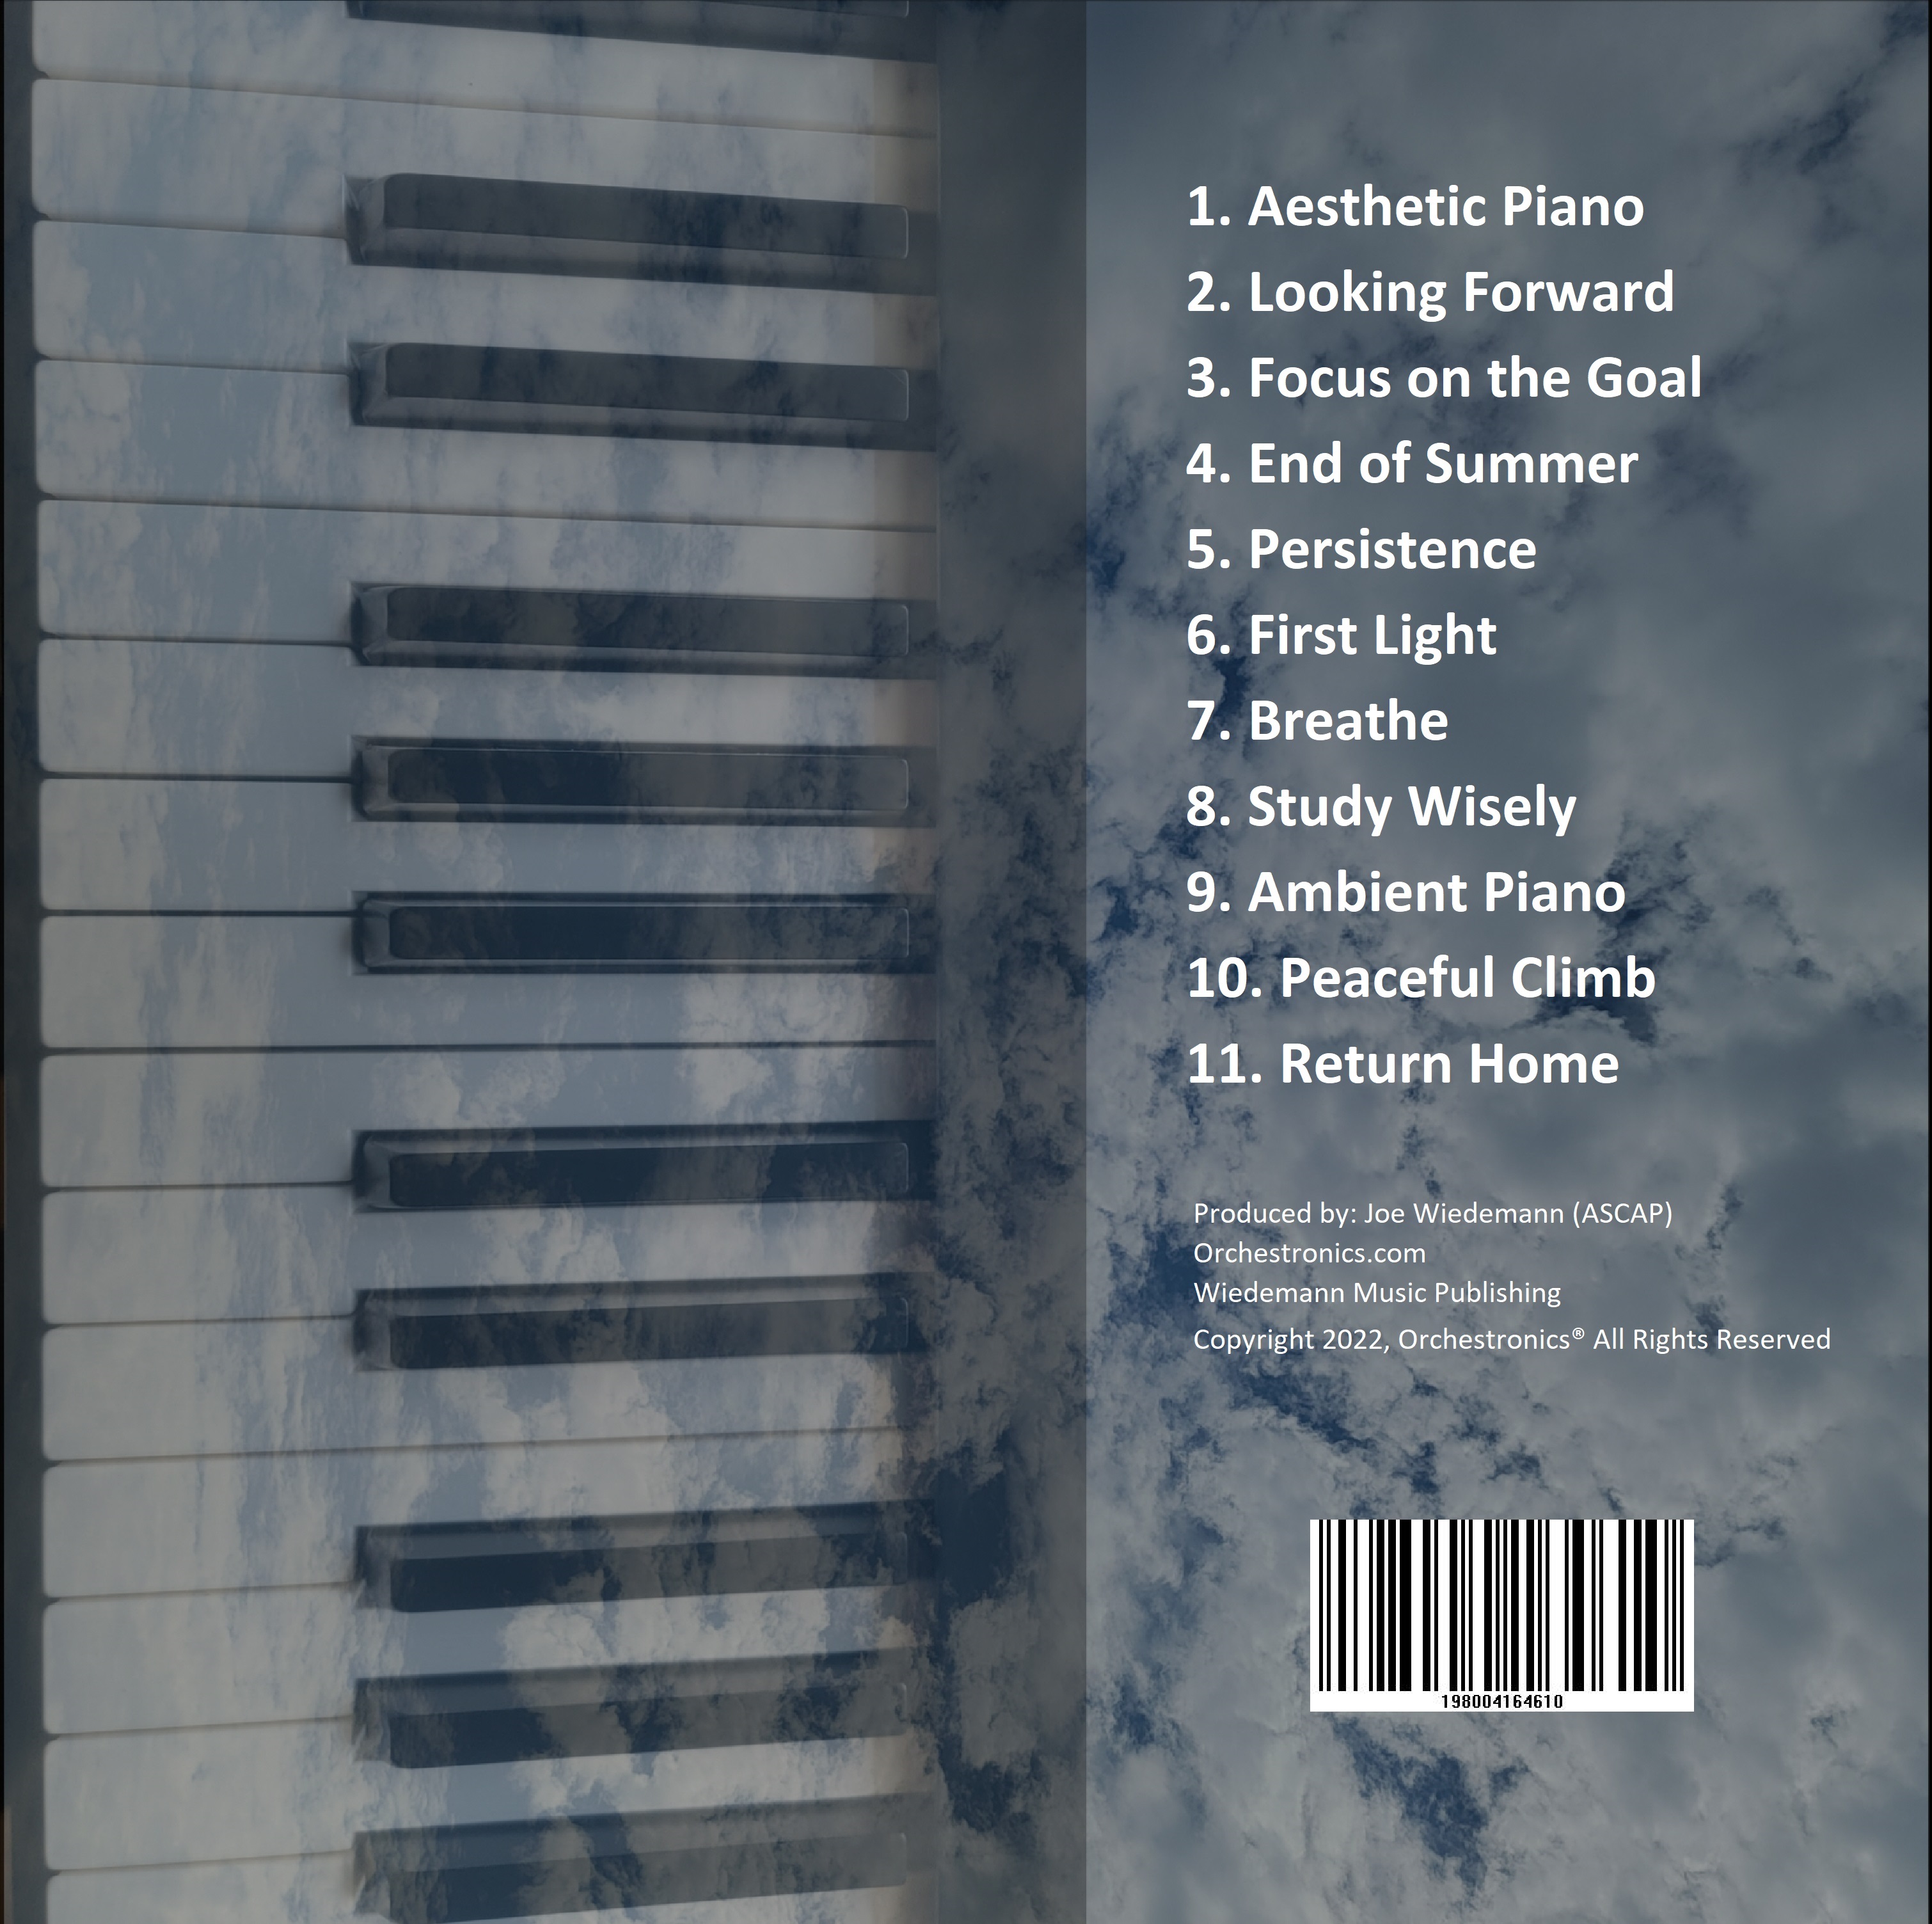 Aesthetic Piano Album Back Cover